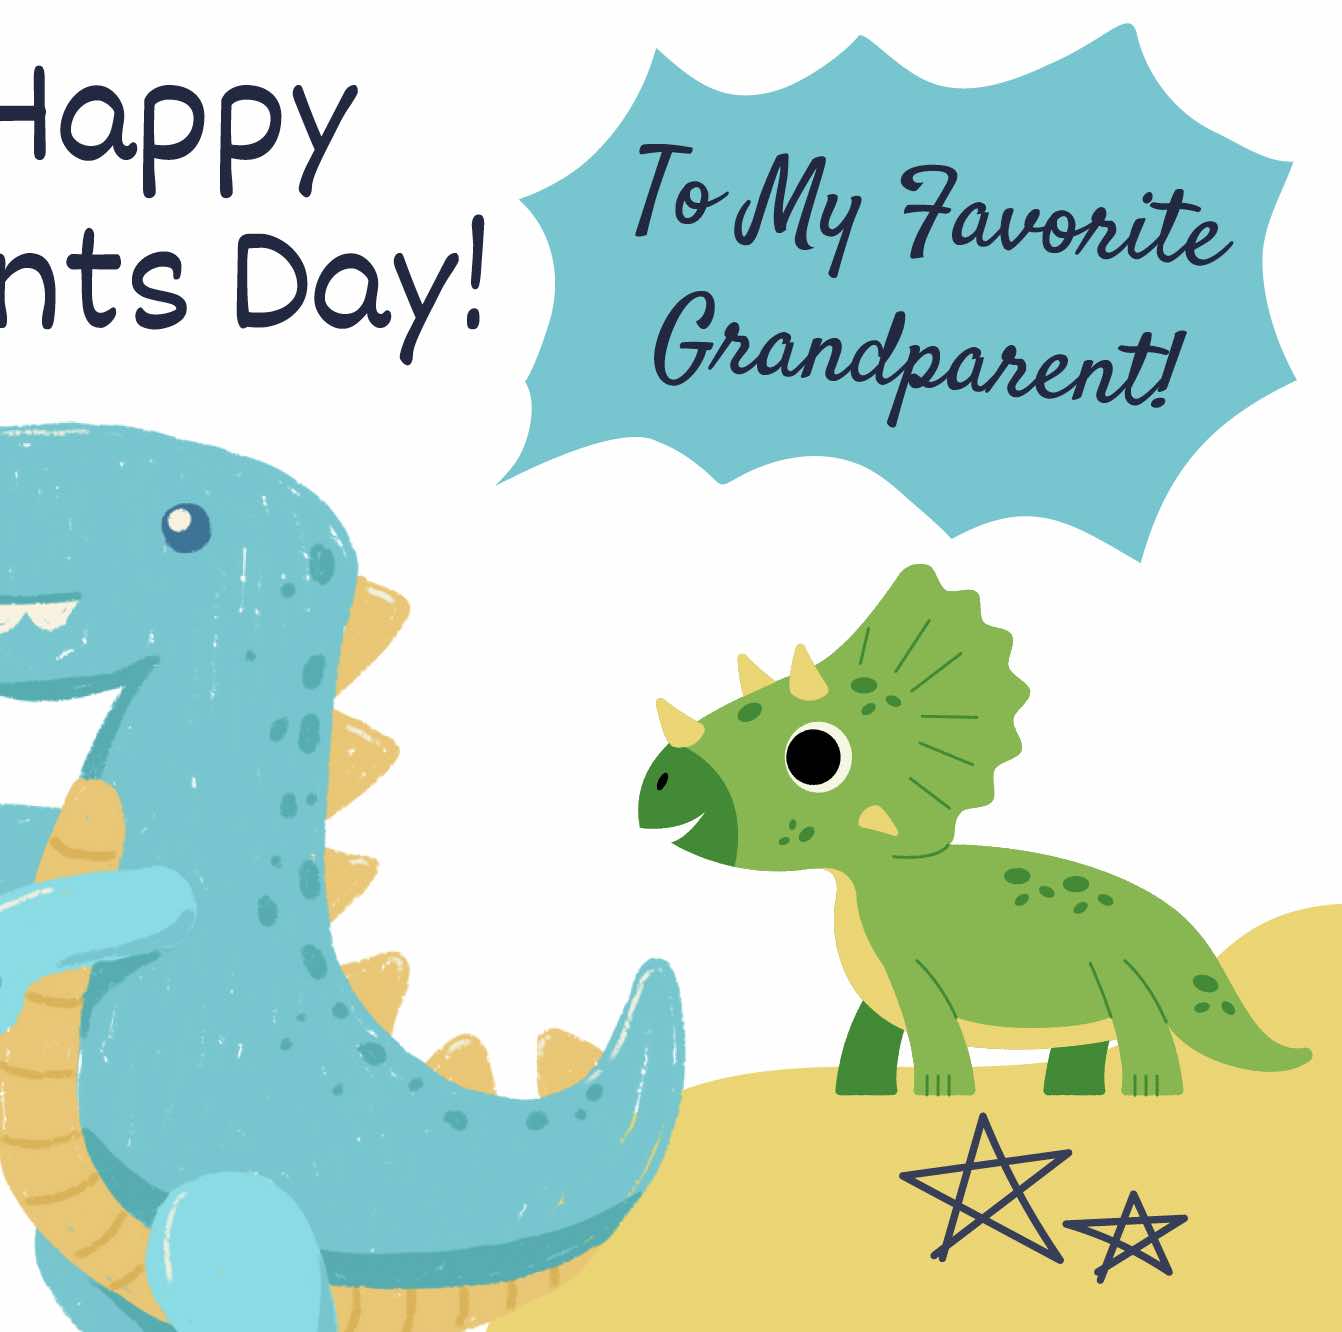 Dino-Mite Grandparents (Grandparents Day E-card) - Make Momentos